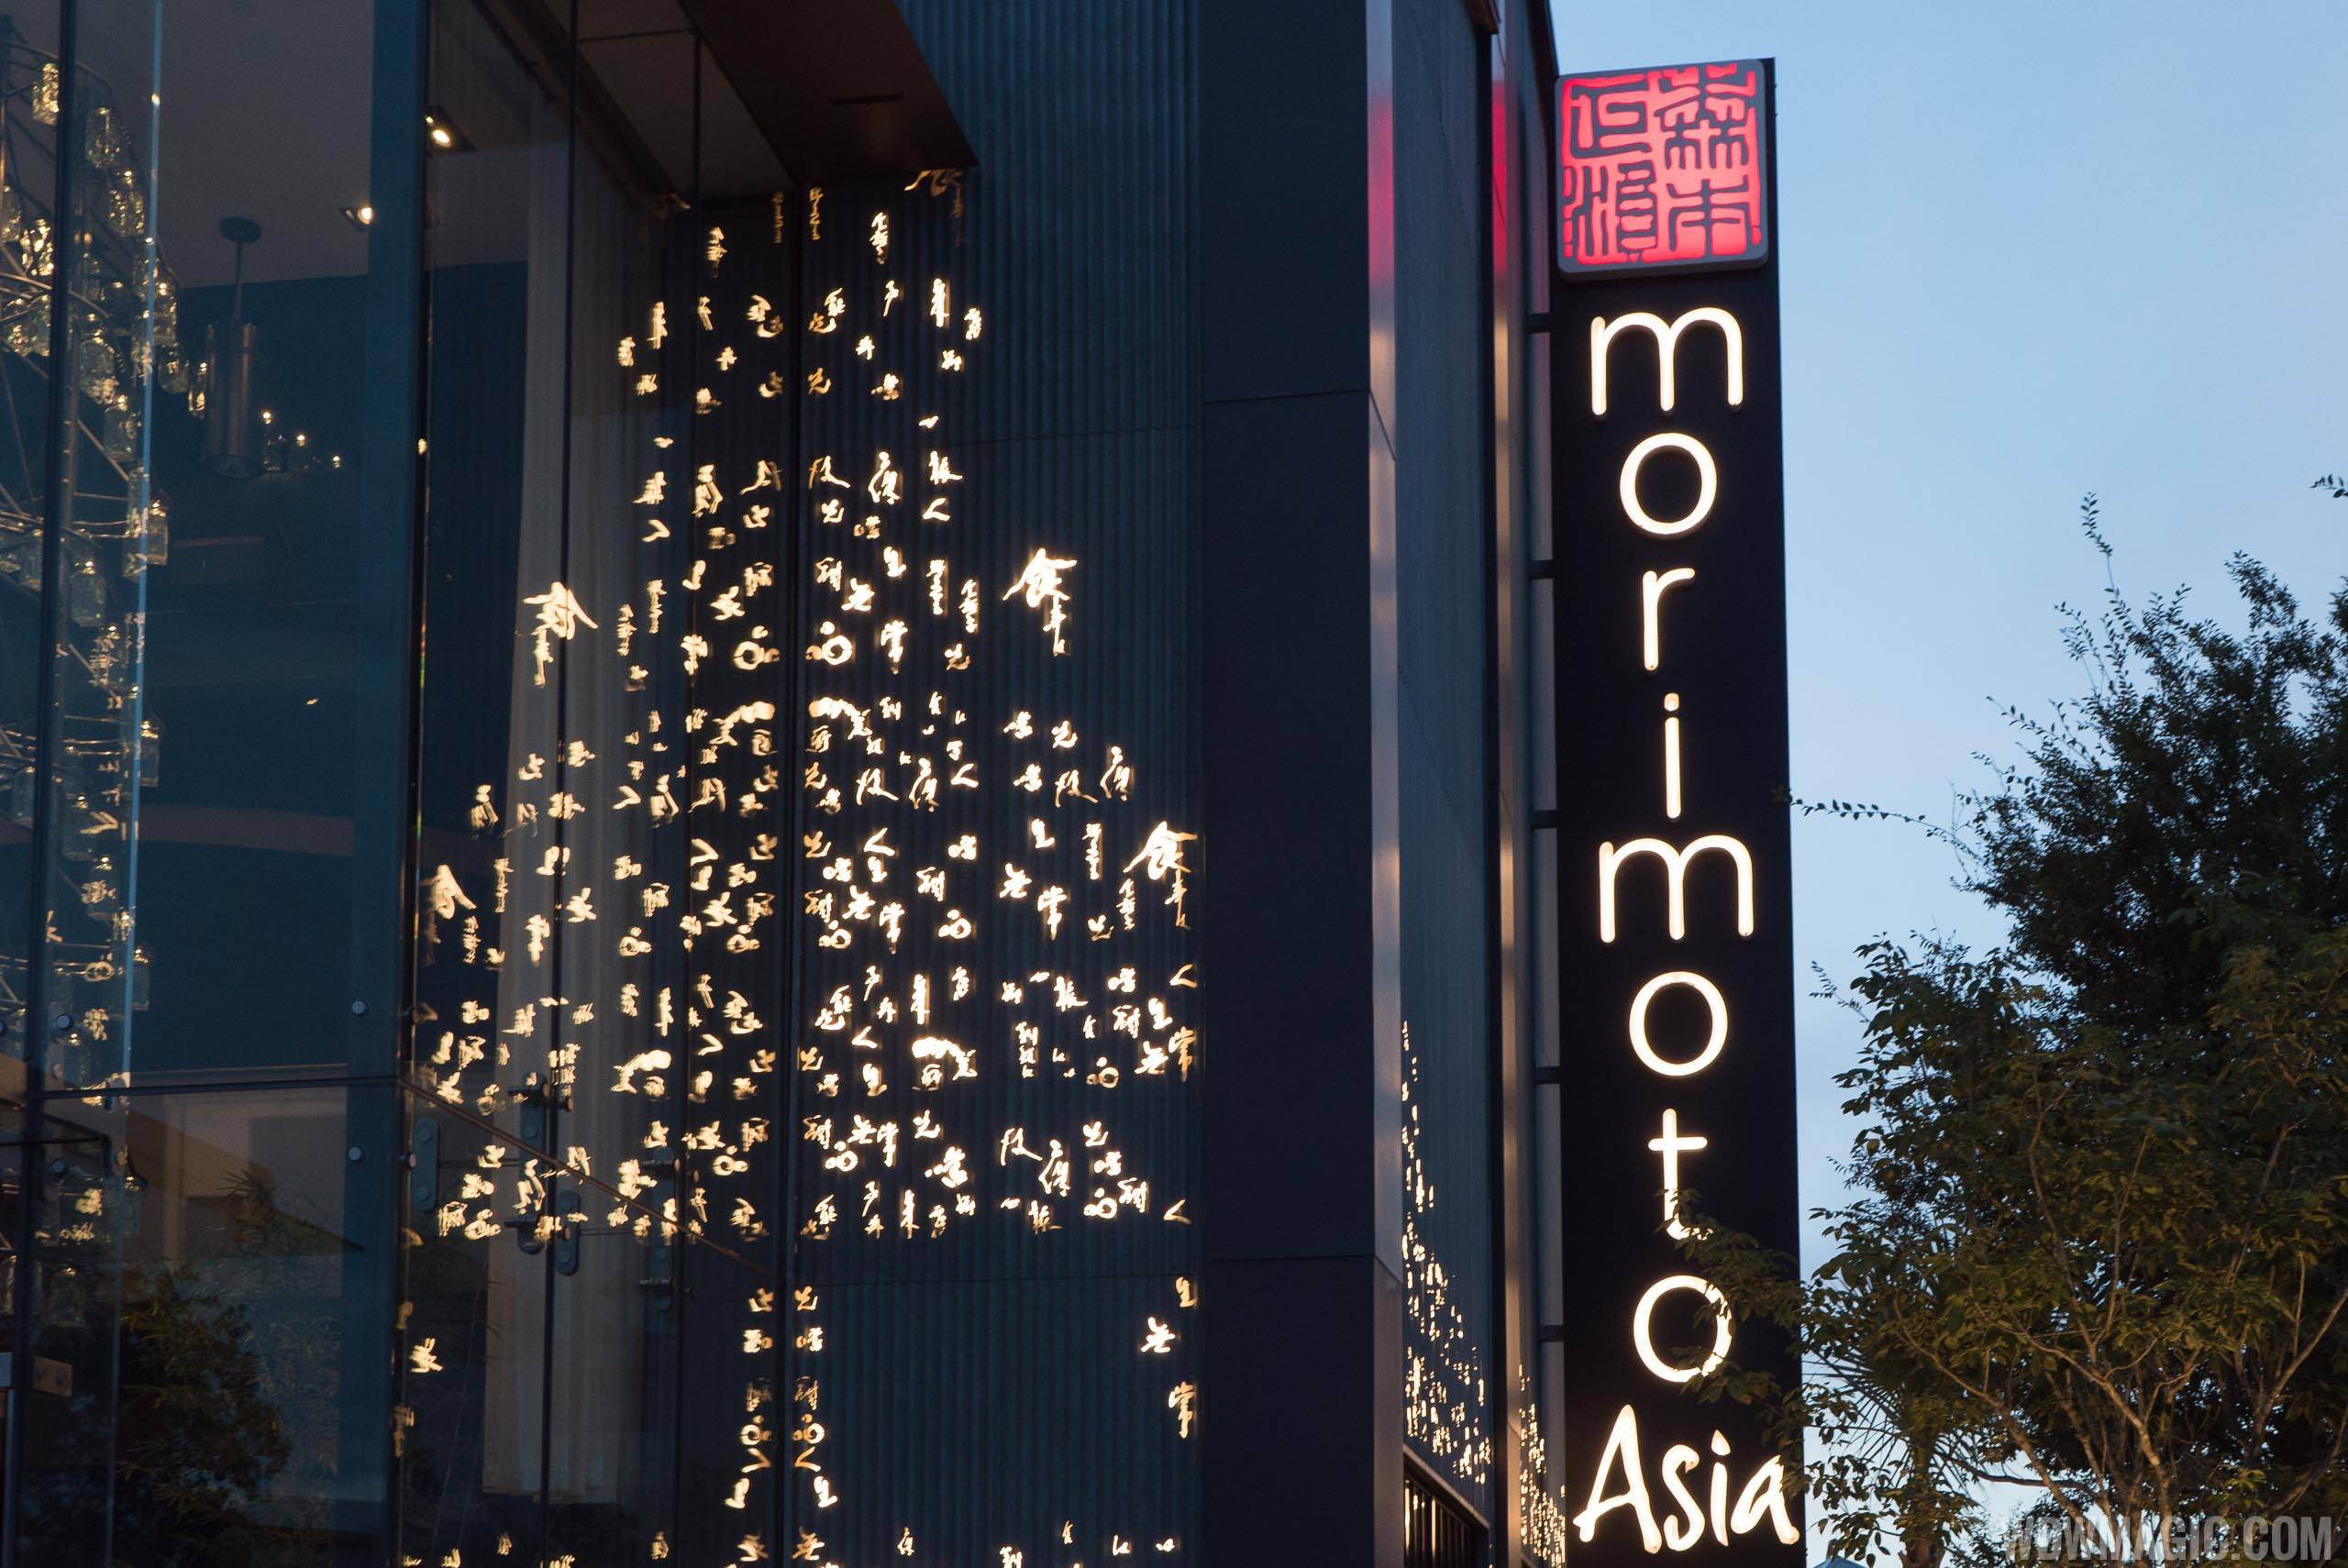 Morimoto Asia celebrates fifth anniversary at Disney Springs with special $5 menu items